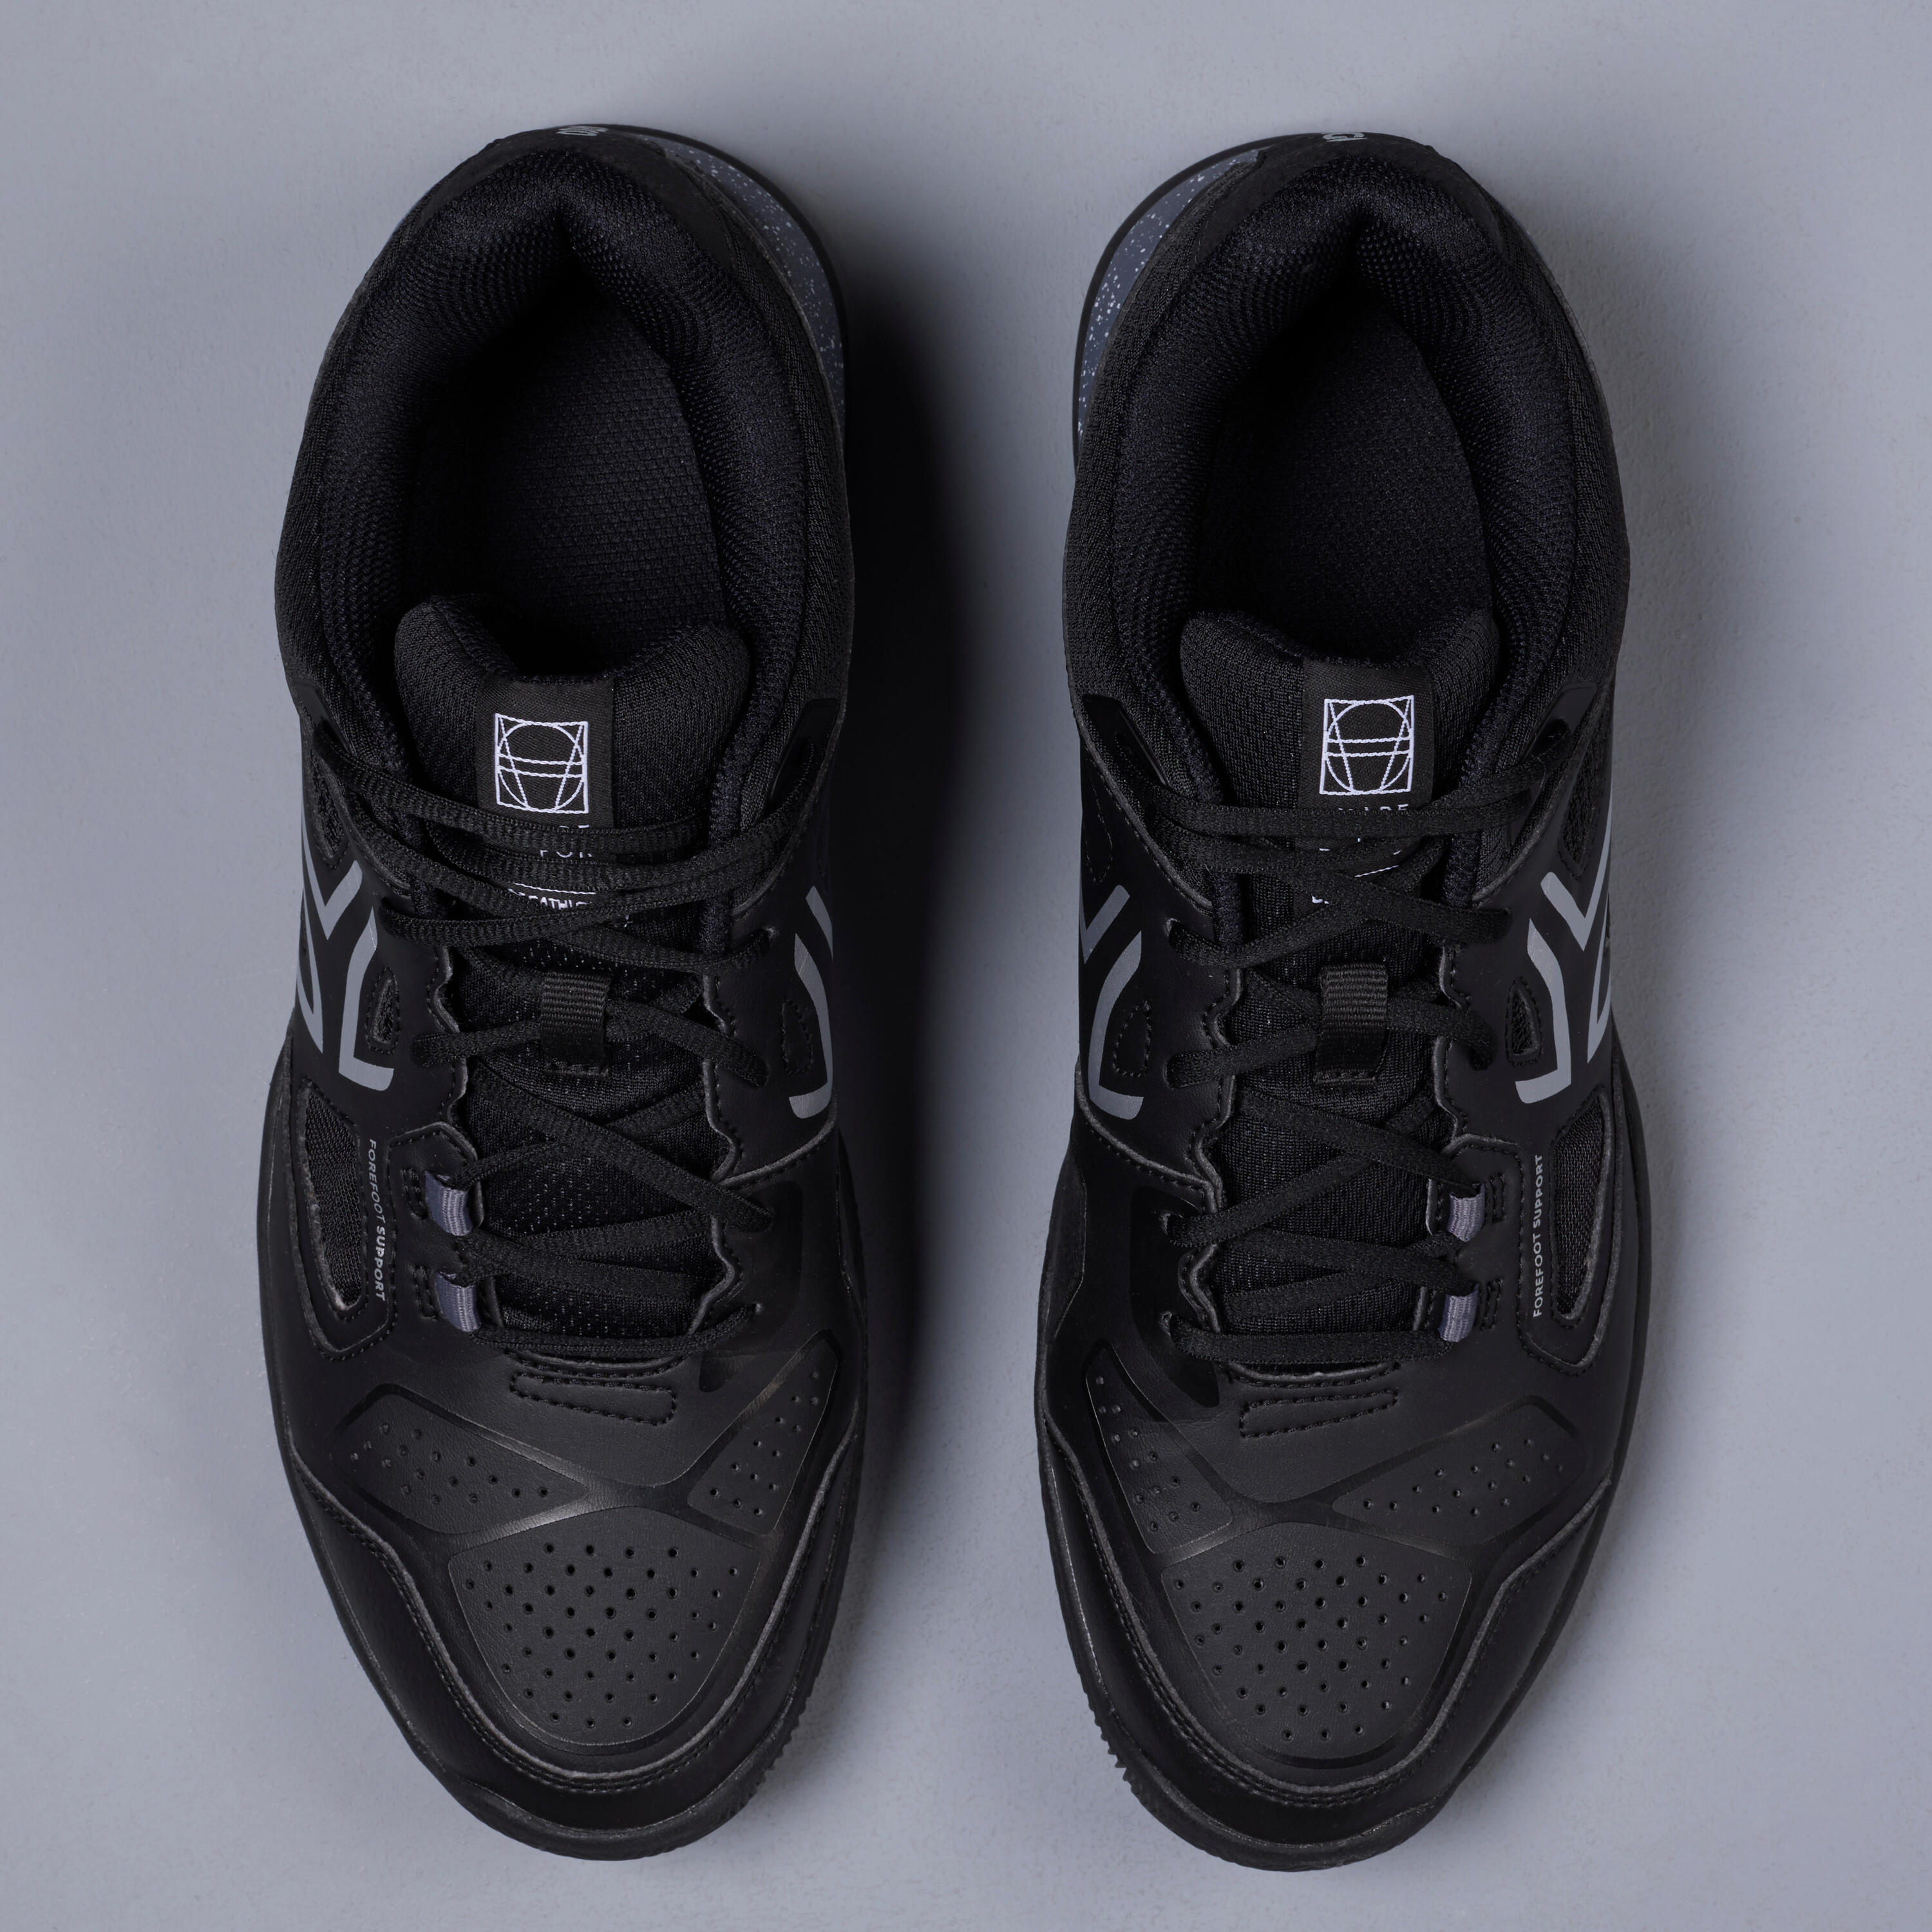 Men's Clay Court Tennis Shoes TS 500 - Black/Grey 5/8